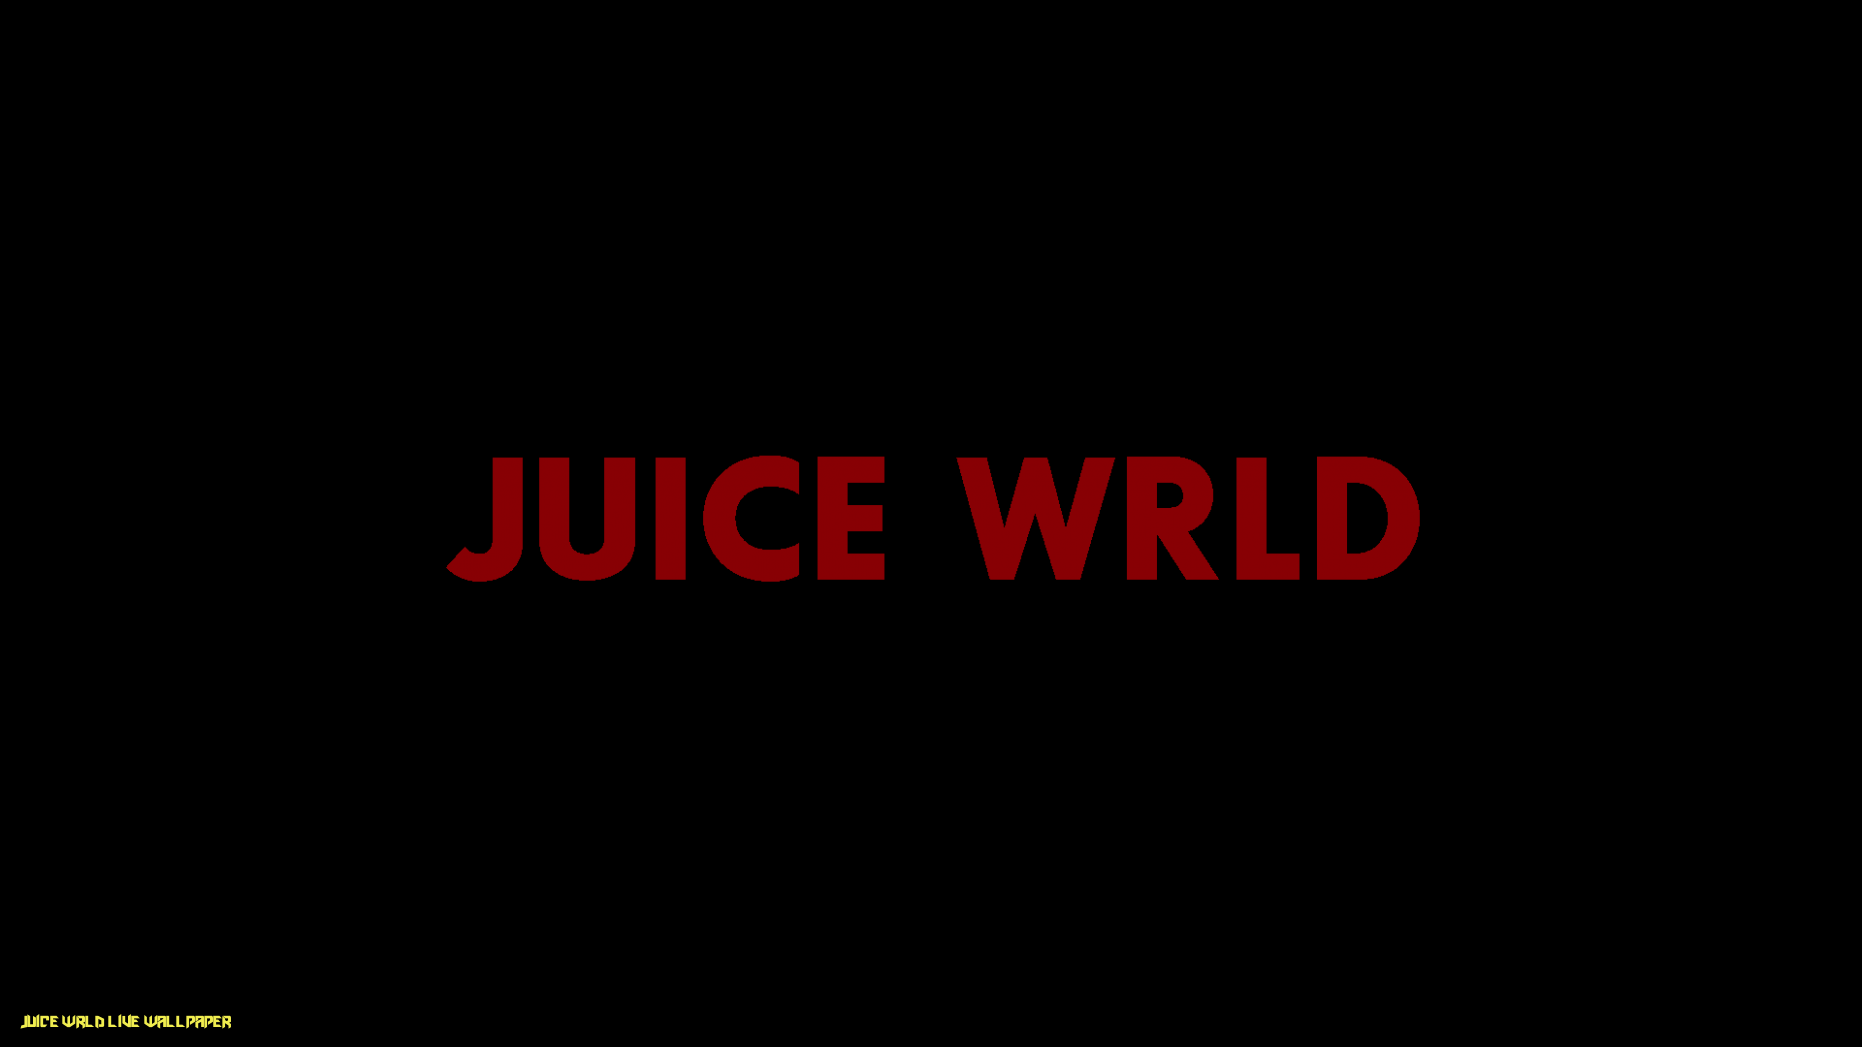 I made a high quality version of the juice wrld logo